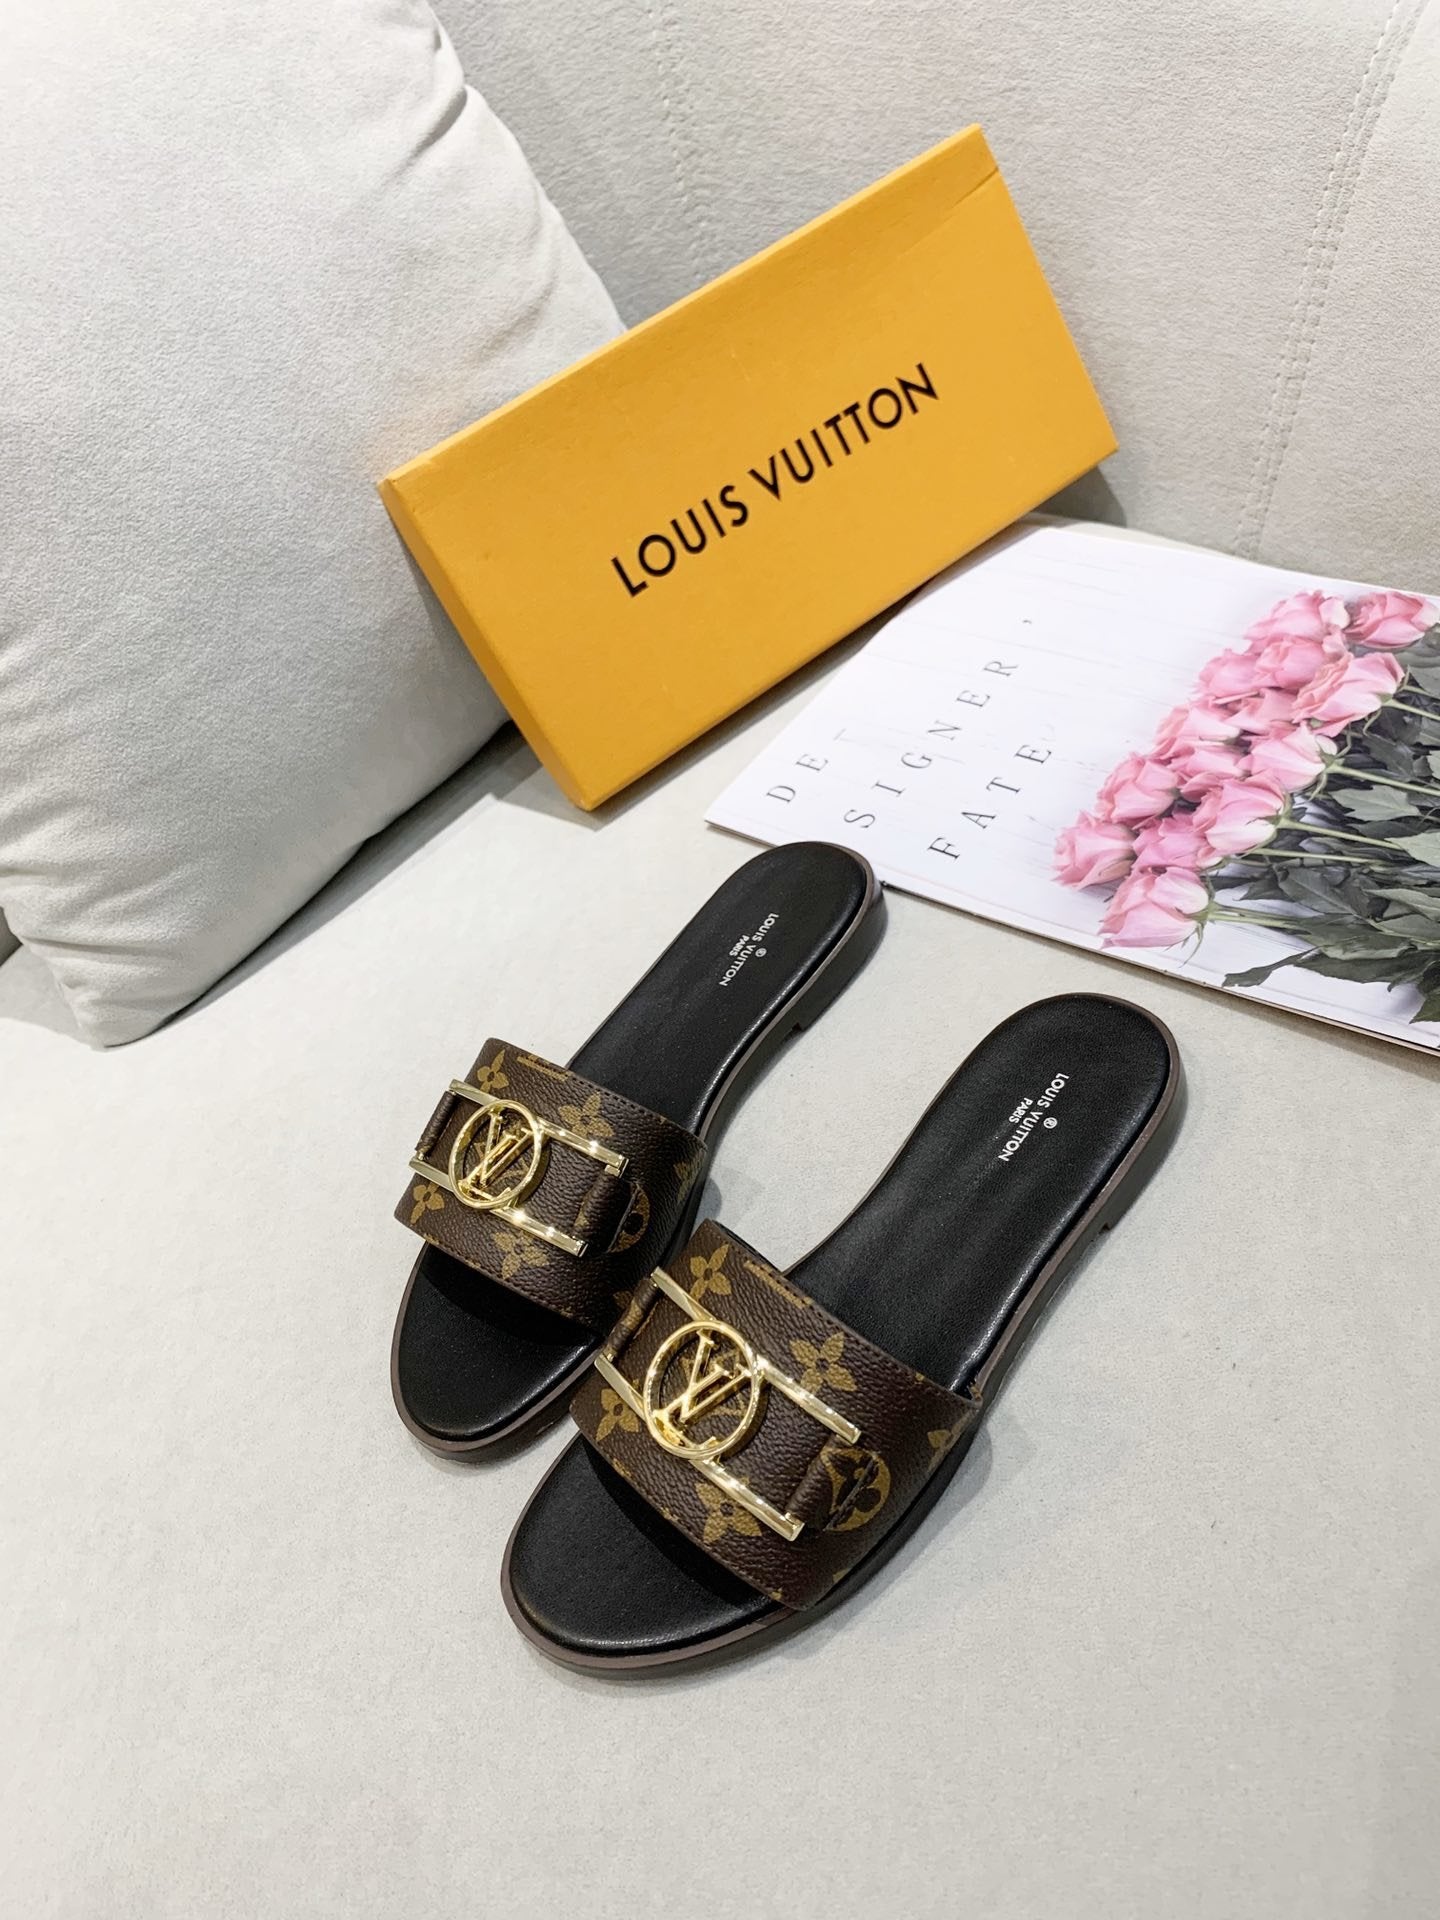 LV Louis Vuitton Women's Leather Slippers Sandals Shoes